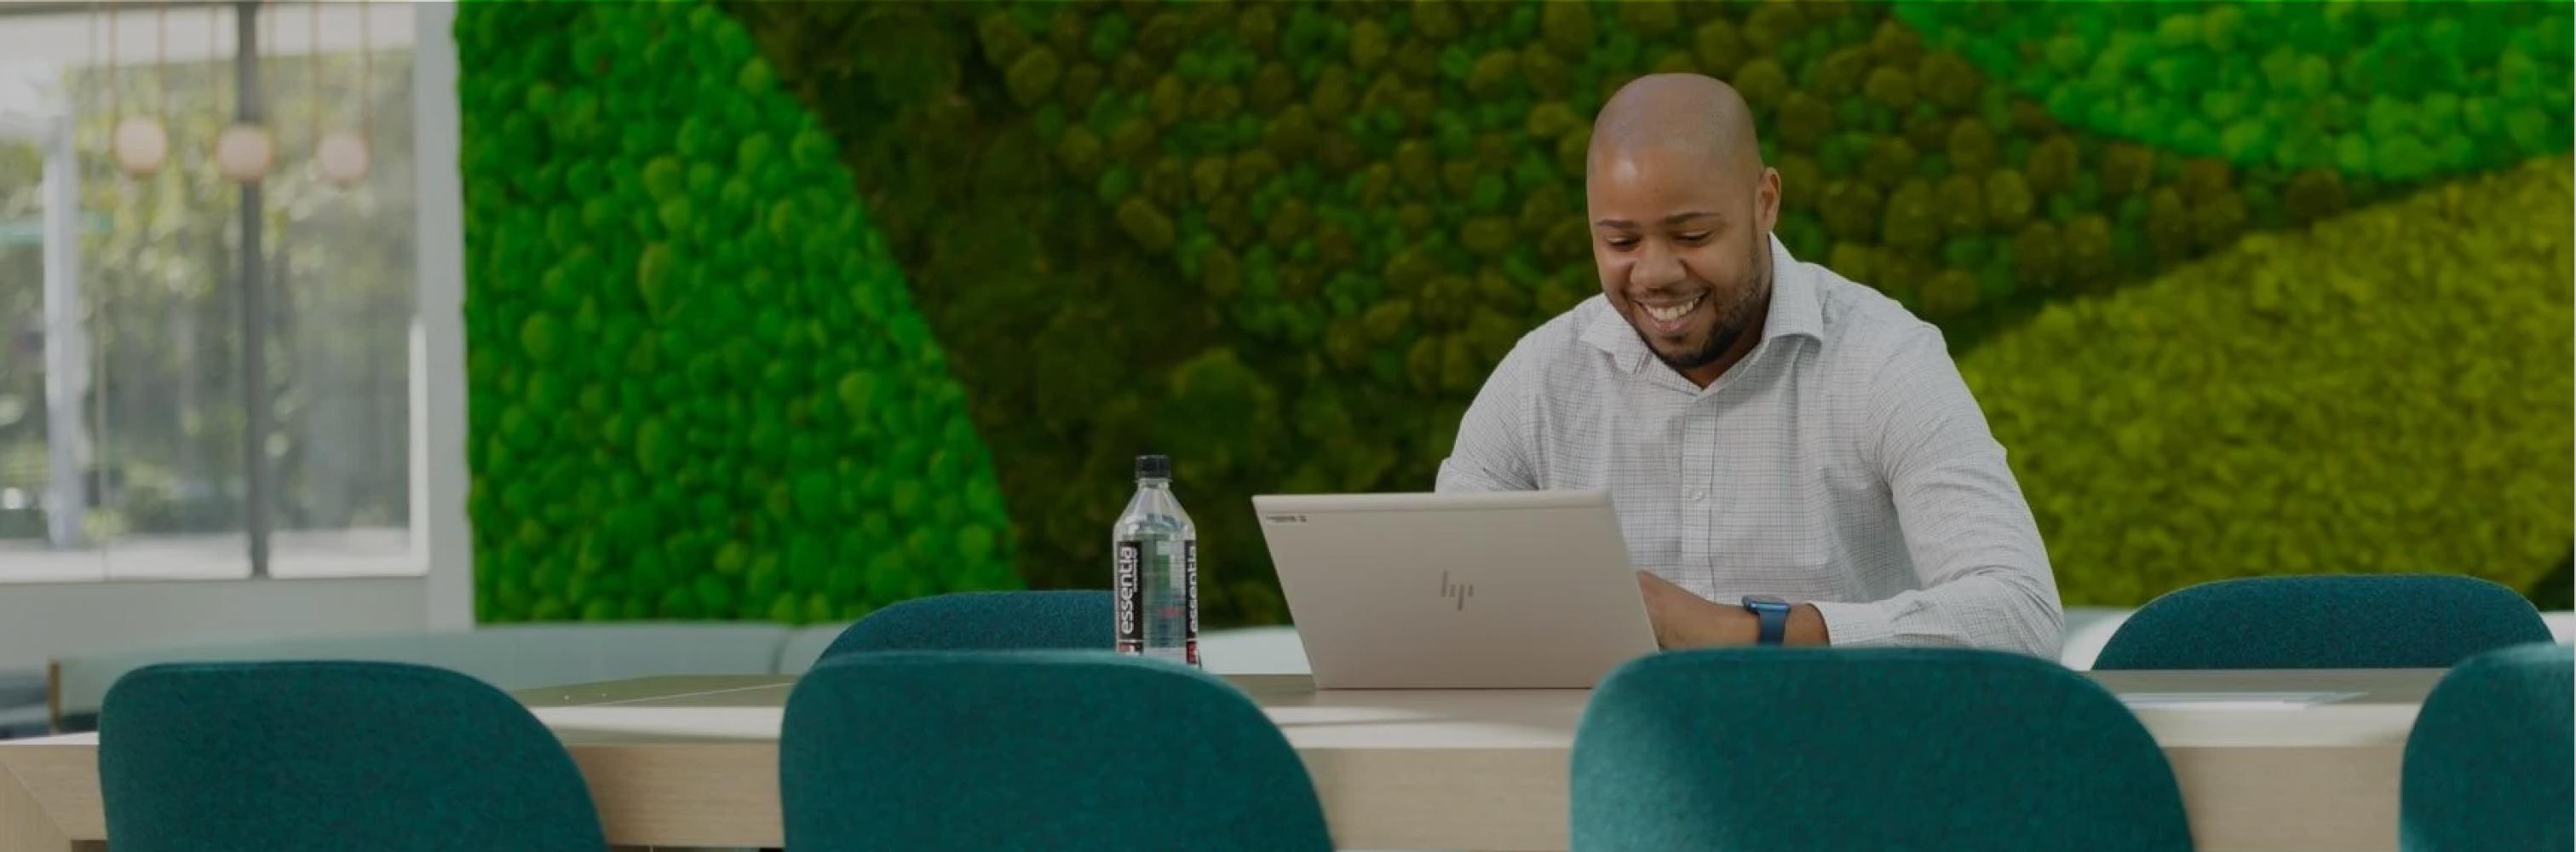 Man sitting at table on laptop